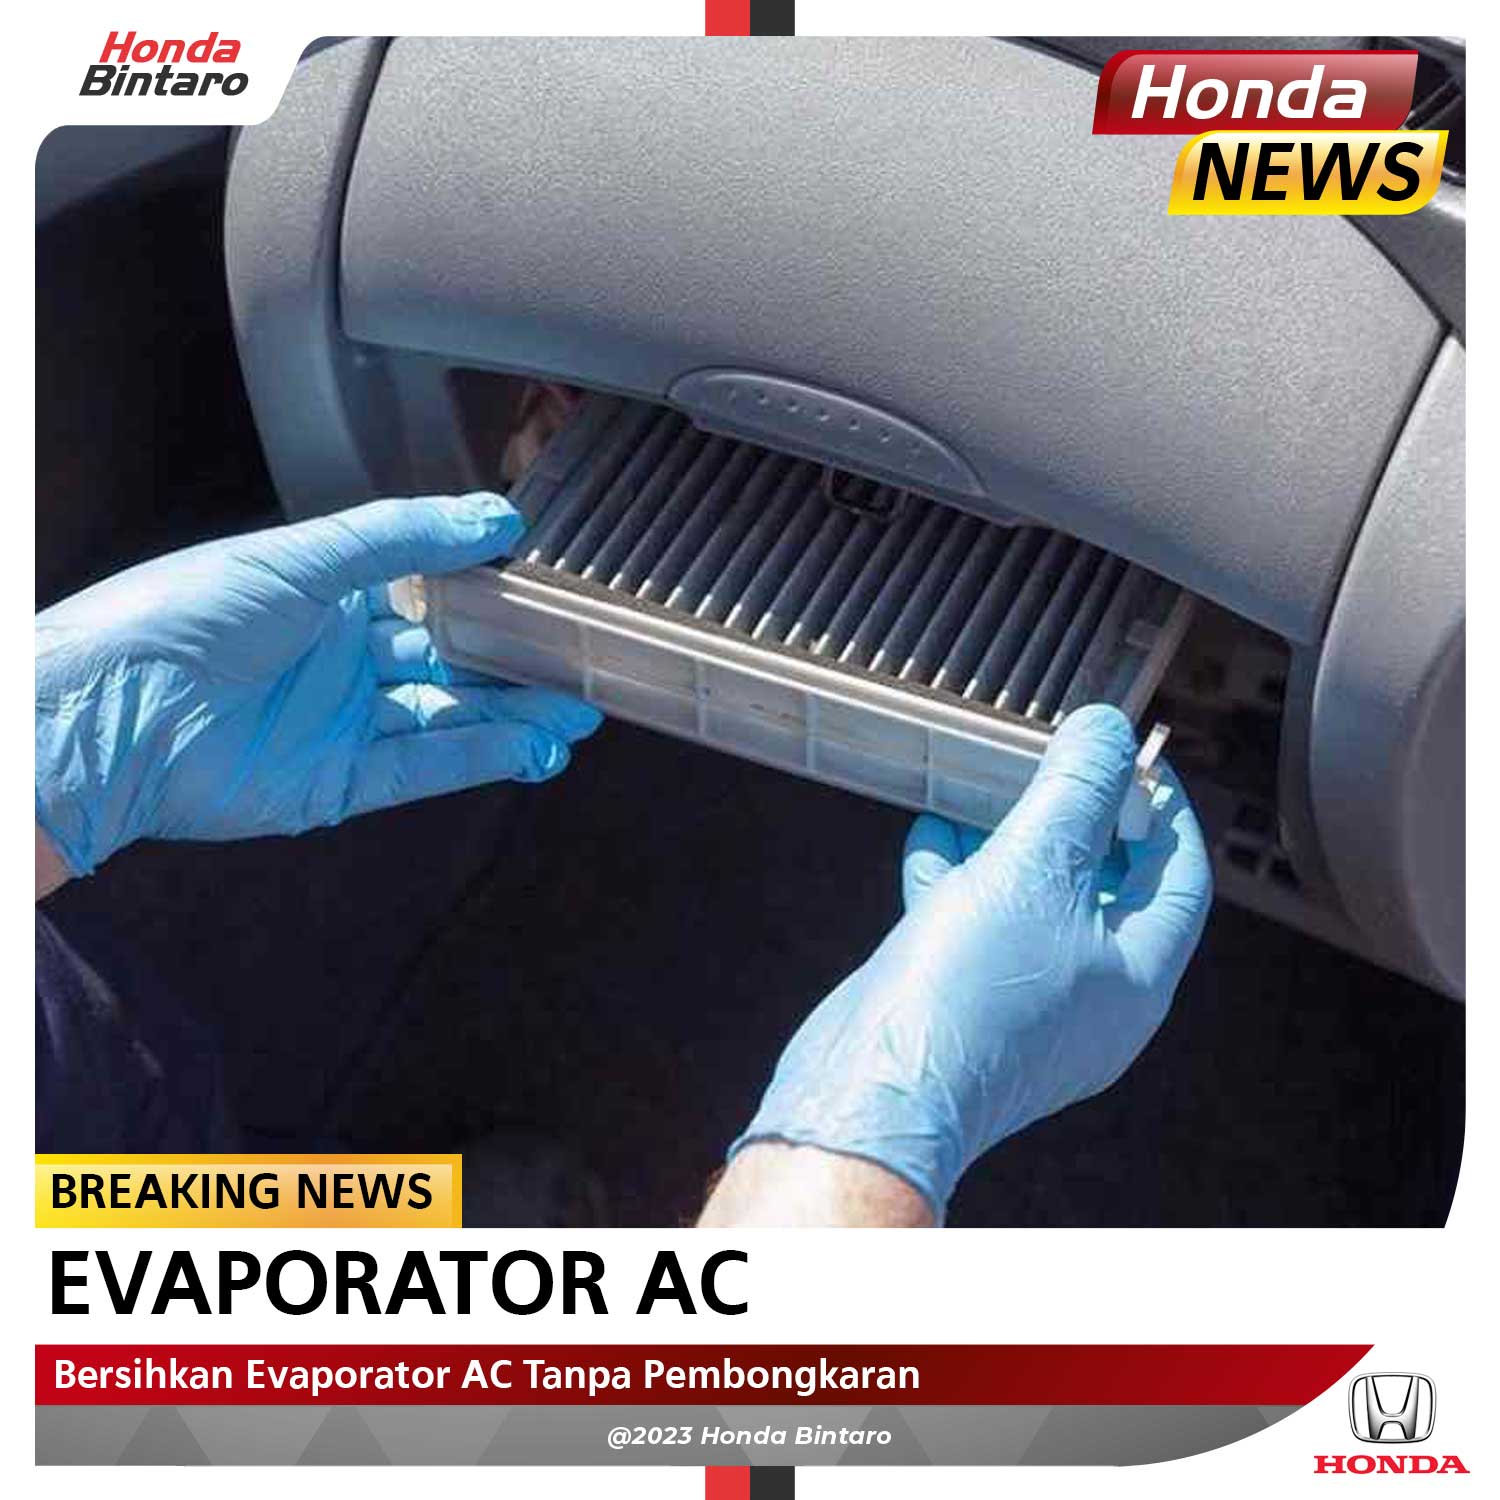 Bersihkan Evaporator AC tanpa Pembongkaran